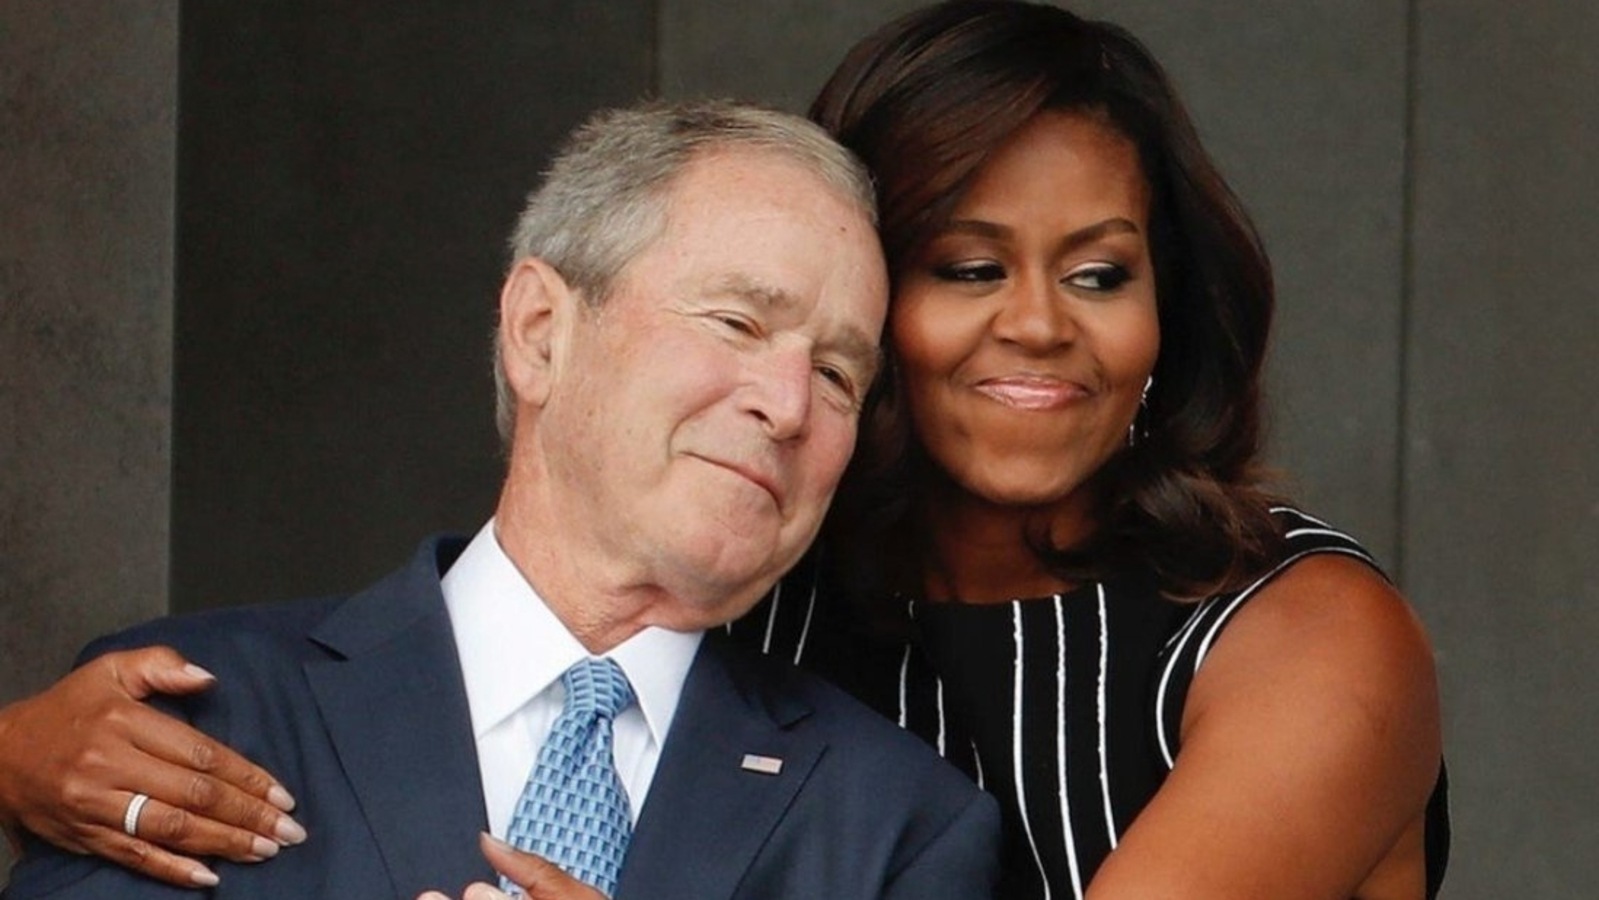 George W. Bush mit schöner, Ehefrau Laura Bush 